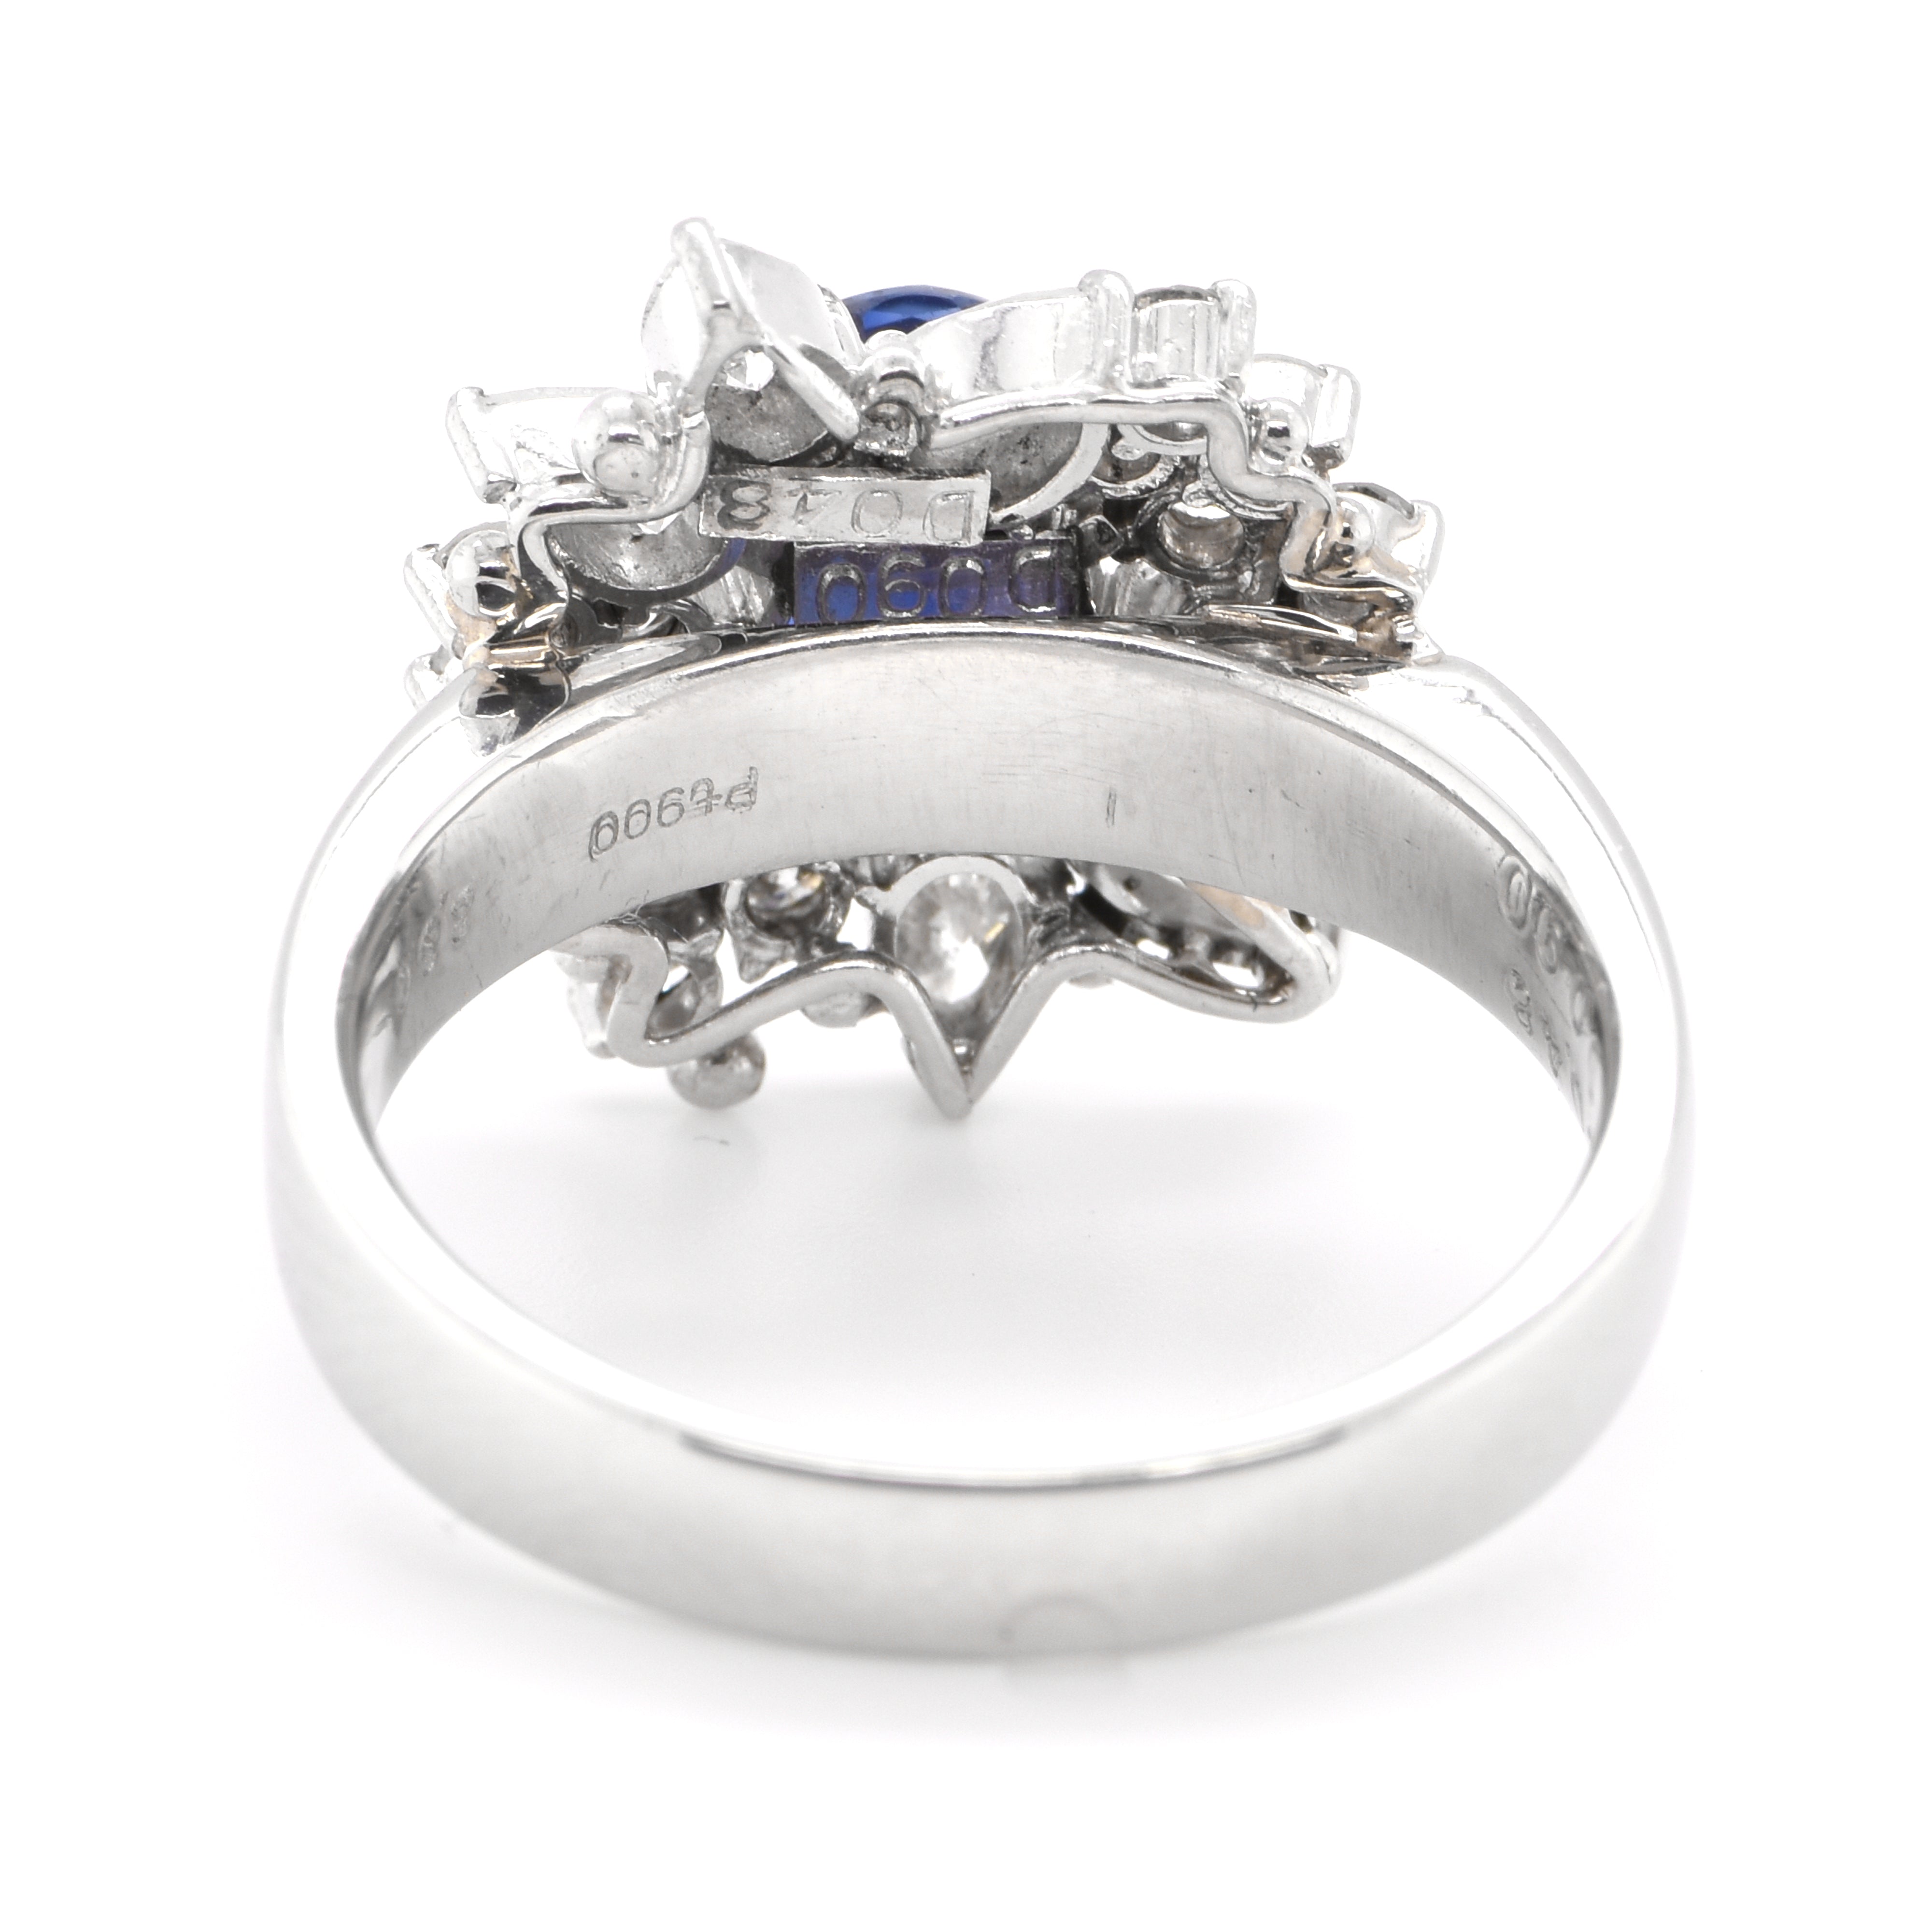 2.30 Carat Natural Madagascar Sapphire and Diamond Ring set in Platinum